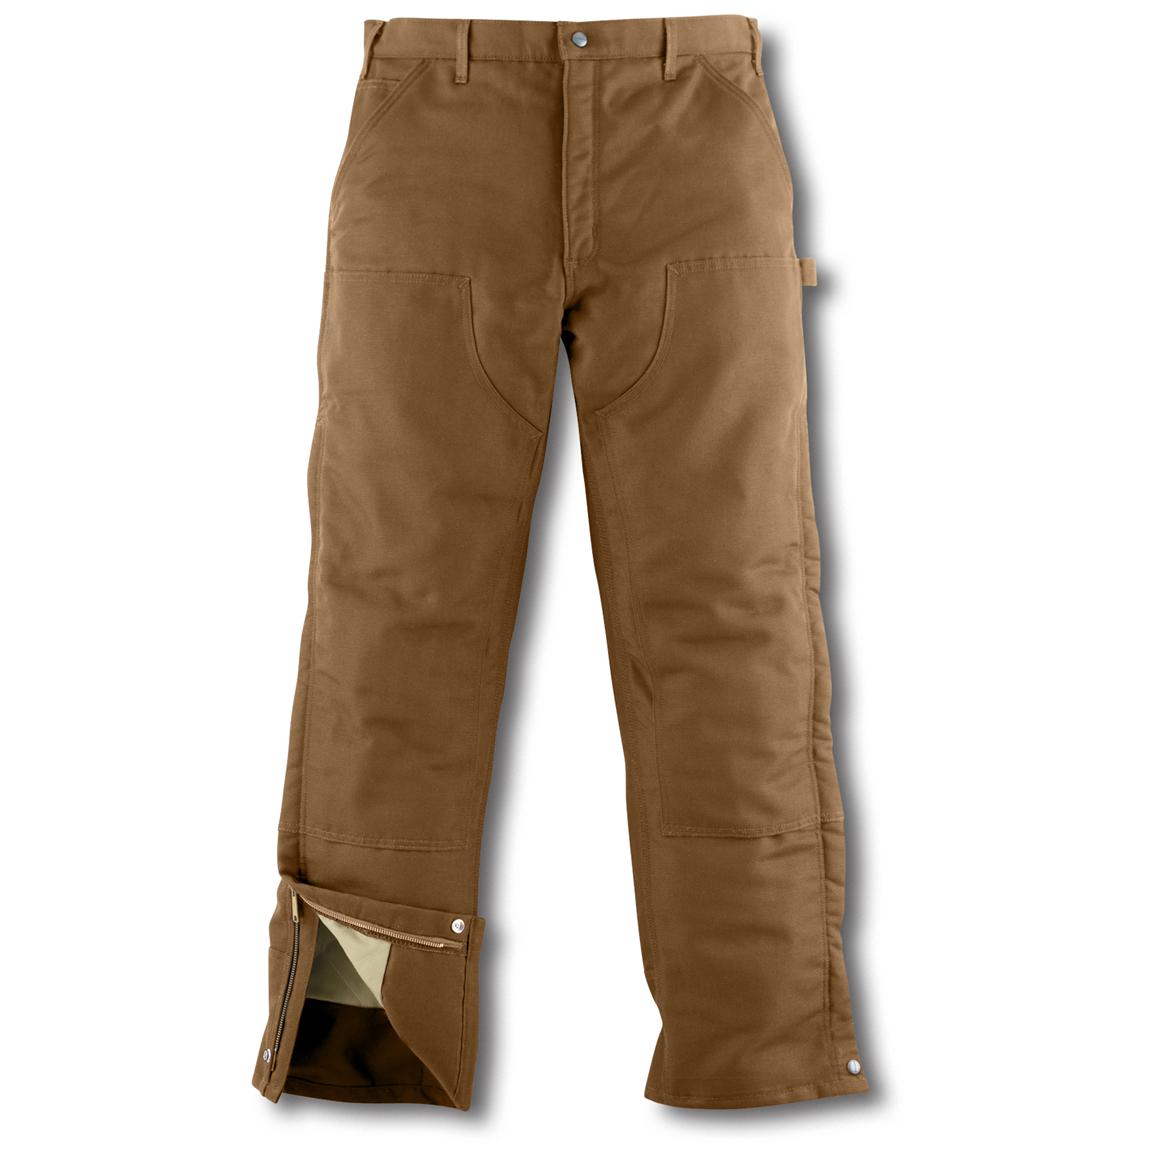 carhartt insulated pants on sale